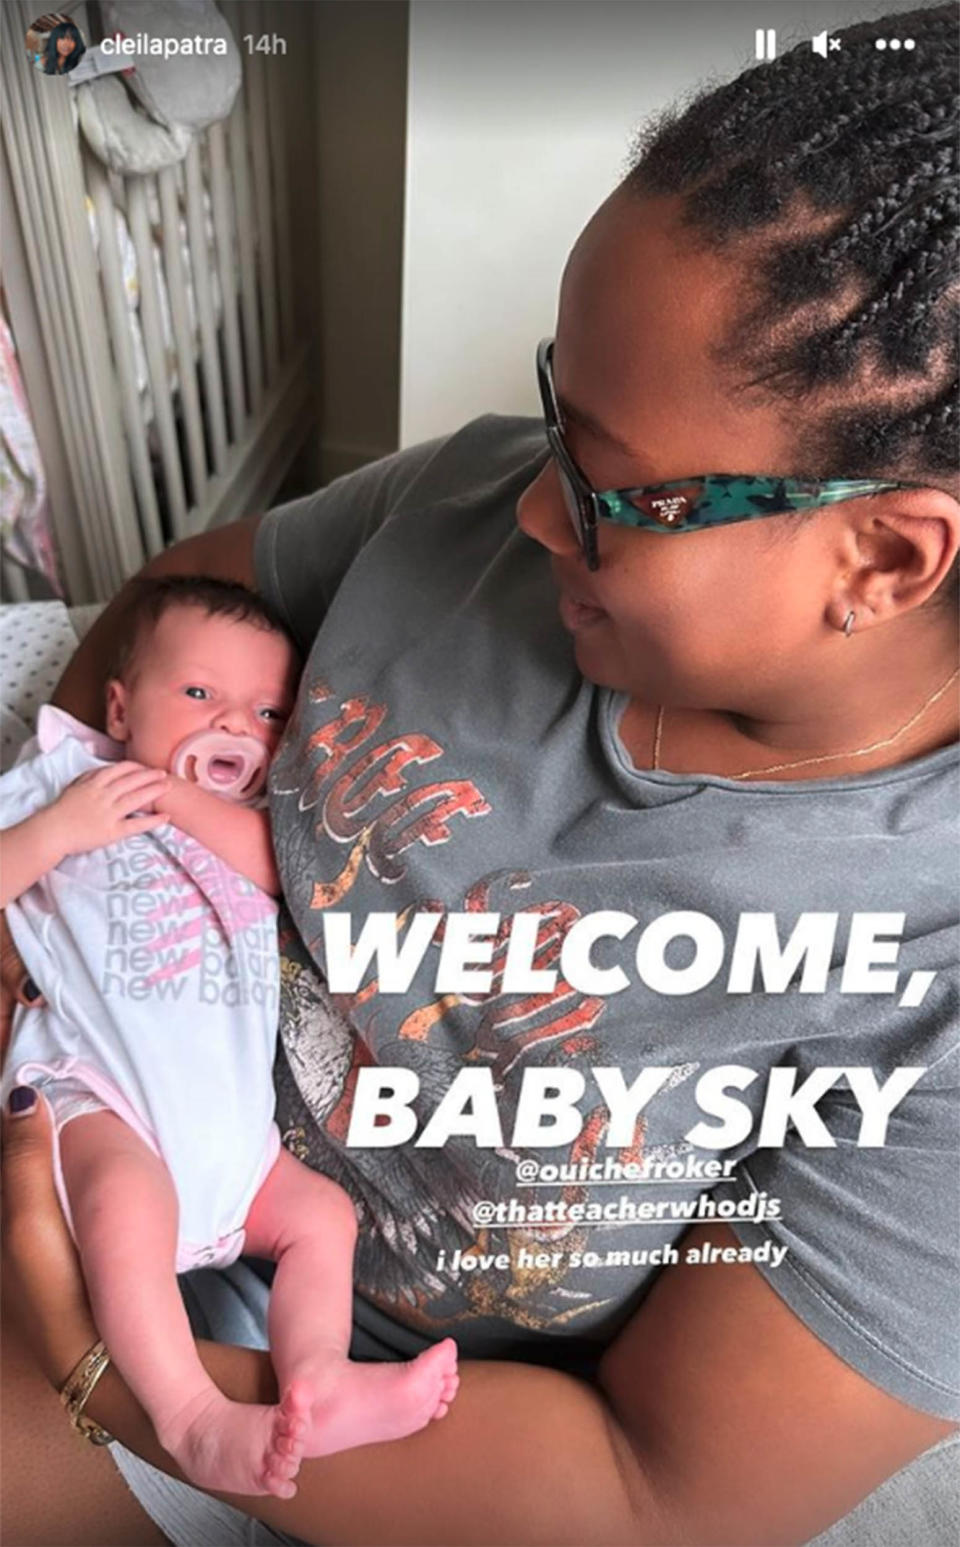 Al Roker's daughter Leila shares a cute photo of her holding her niece, Sky. (@cleilapatra via Instagram)